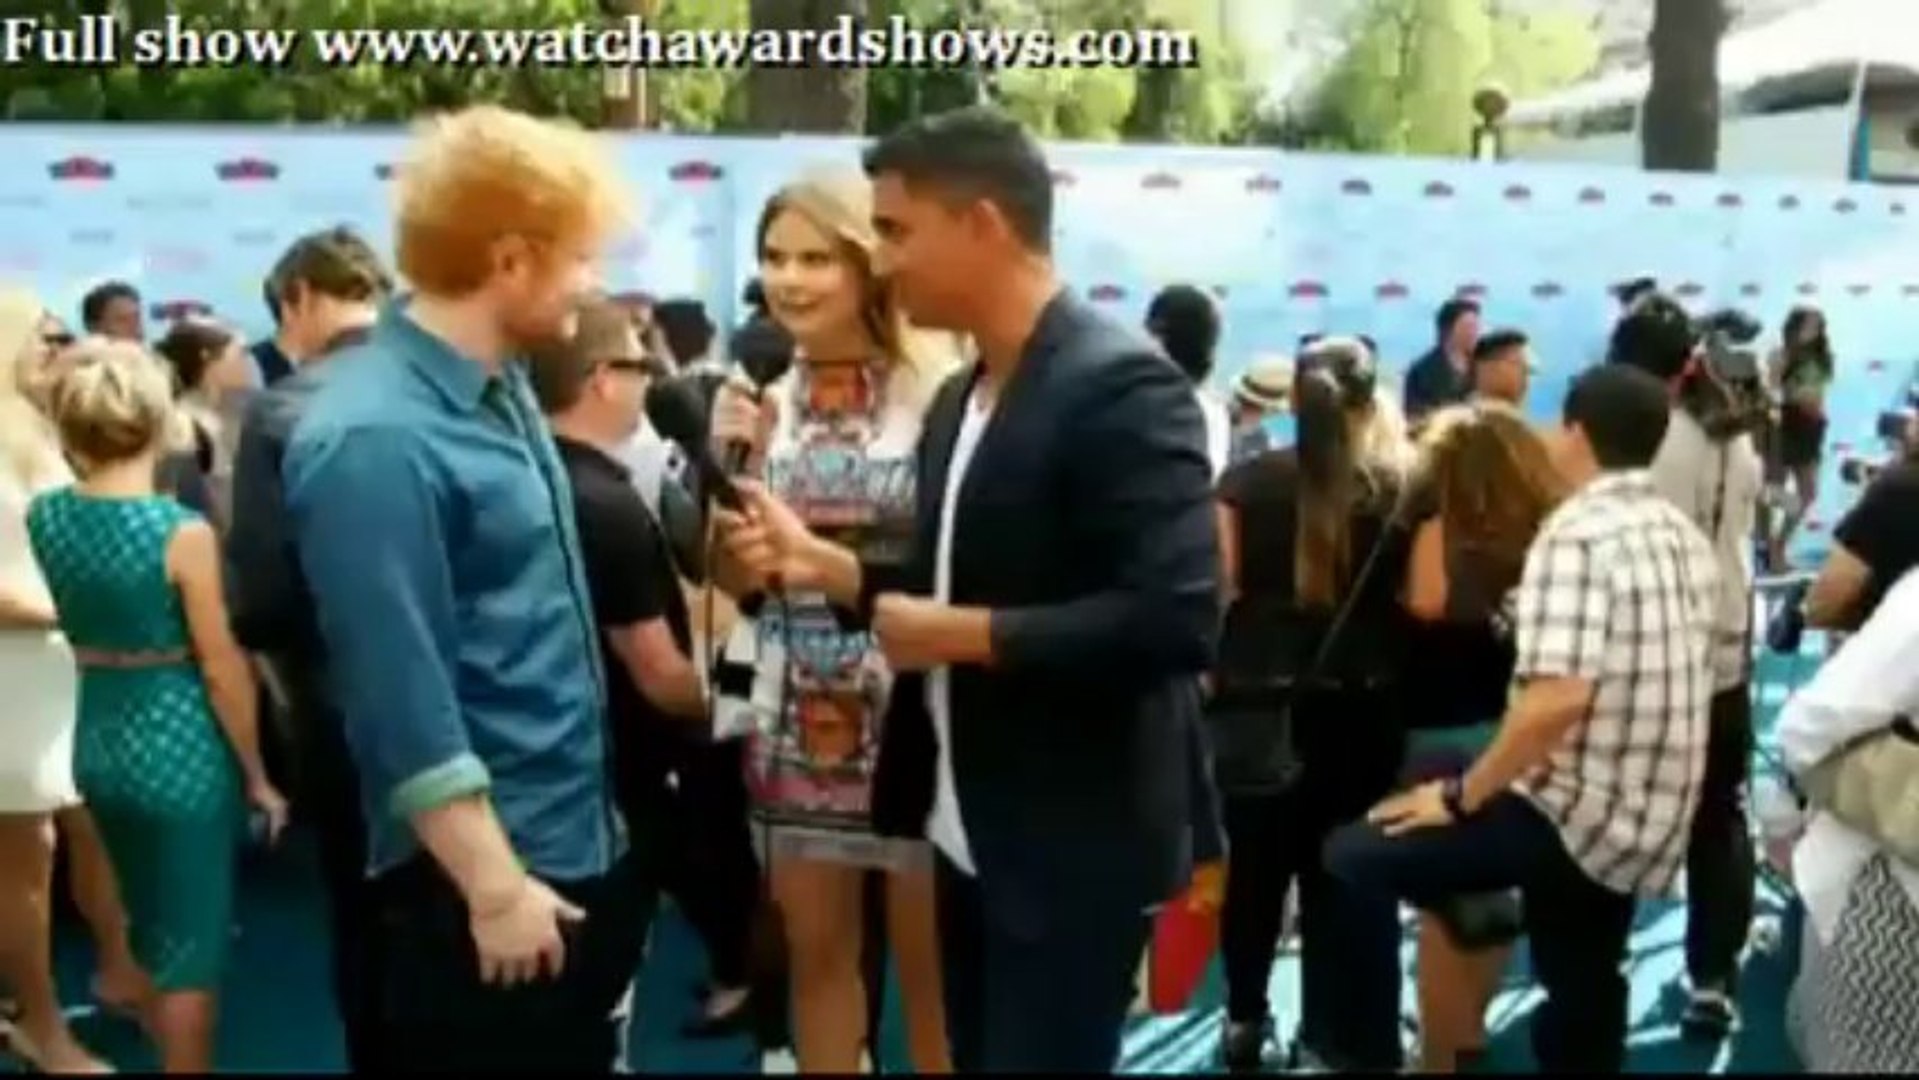 Ed Sheeran red carpet interview Teen Choice Awards 2013